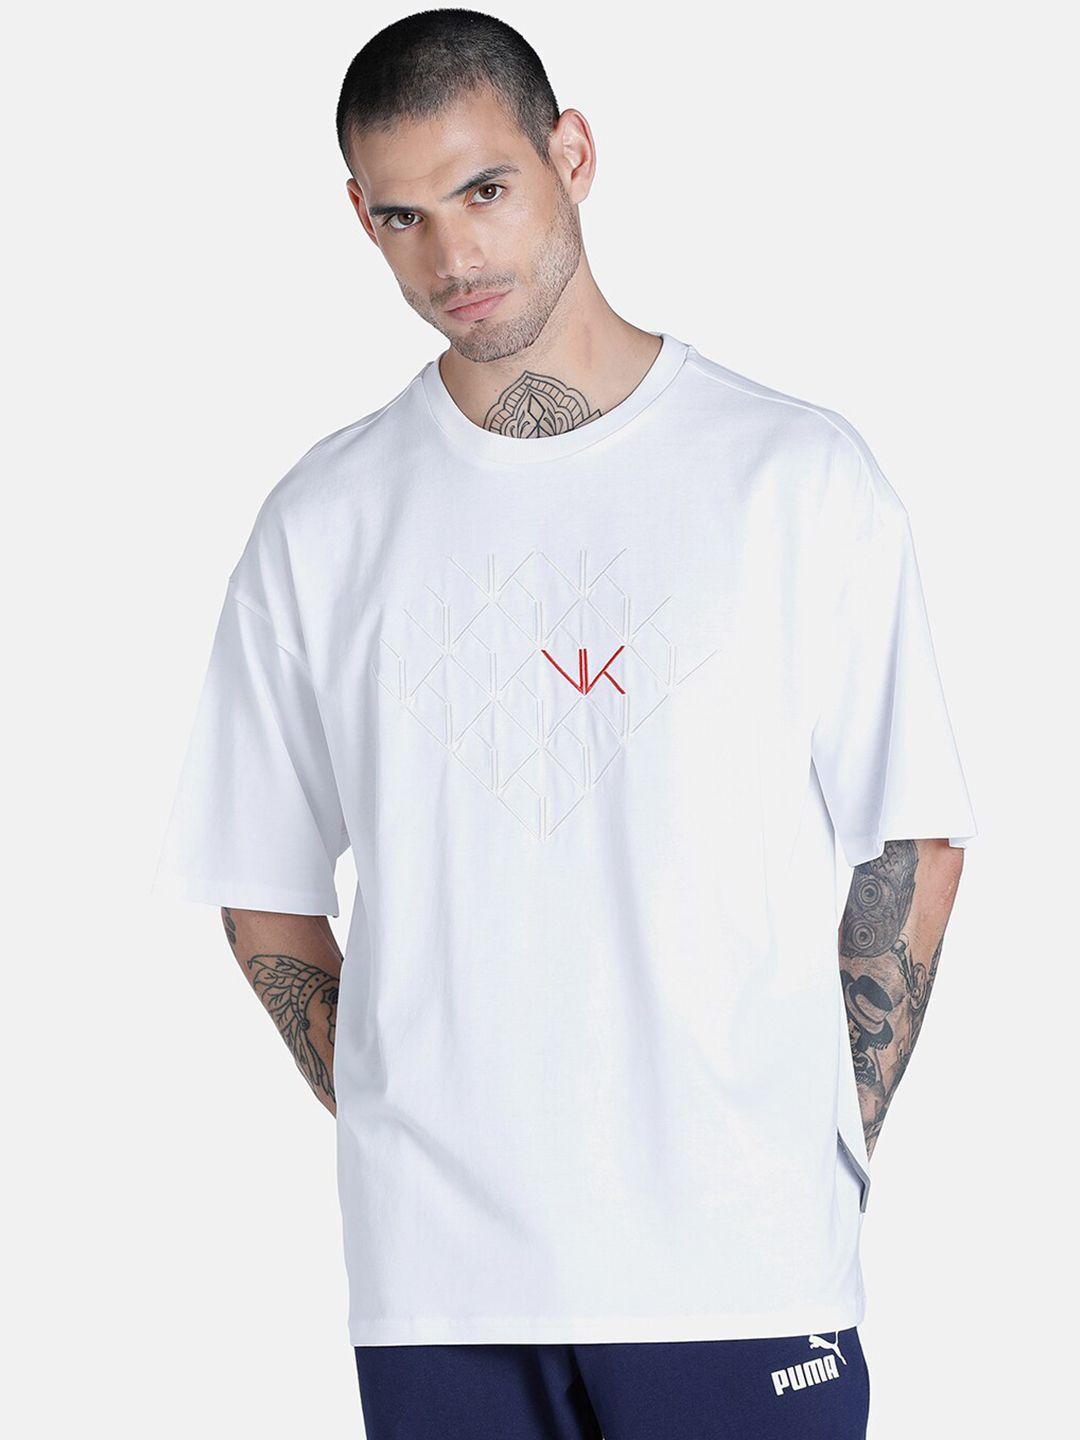 one8 x puma men white printed one8 virat kohli premium cotton loose t-shirt